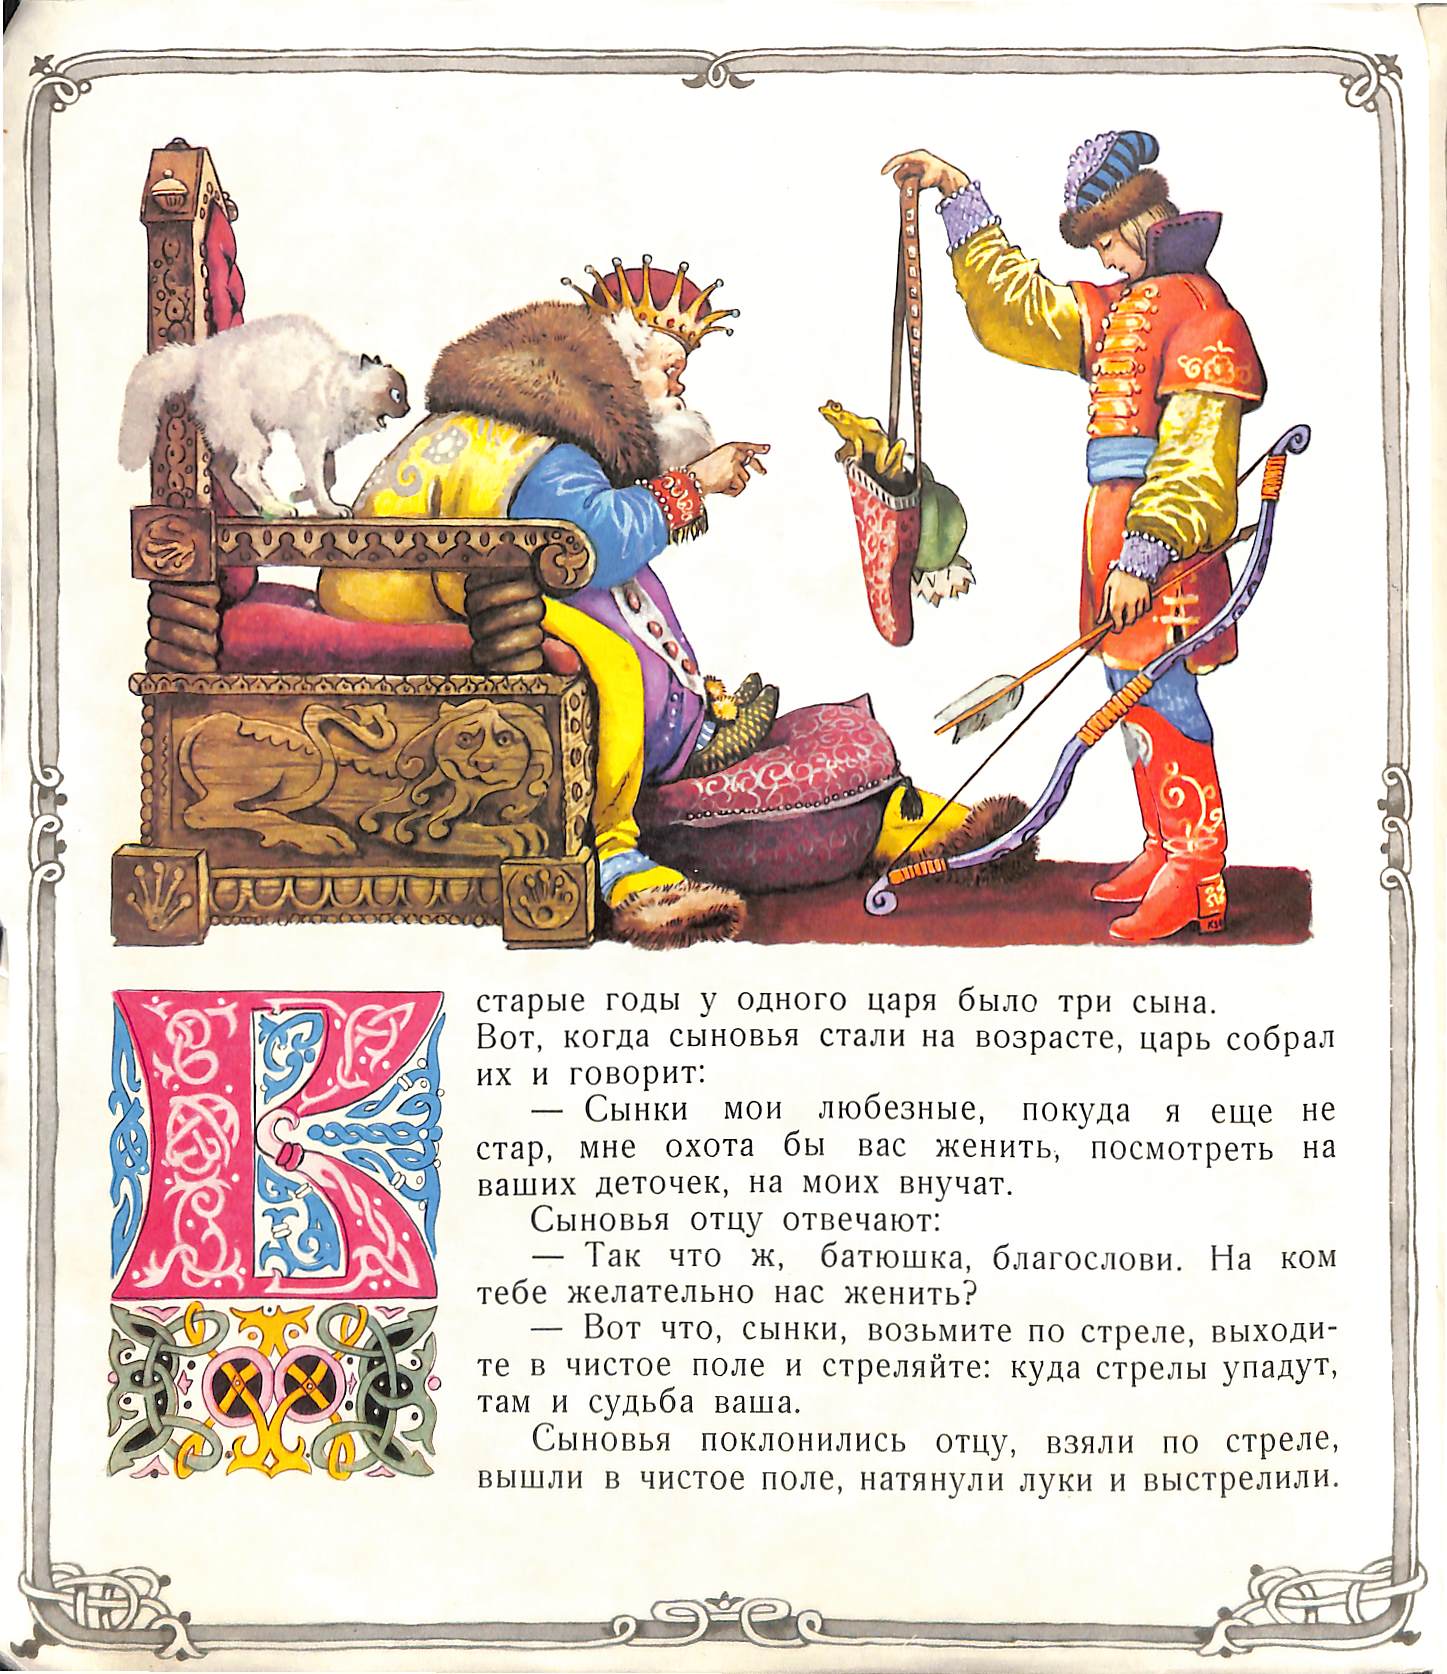 Иллюстрация к сказке царевна лягушка пир